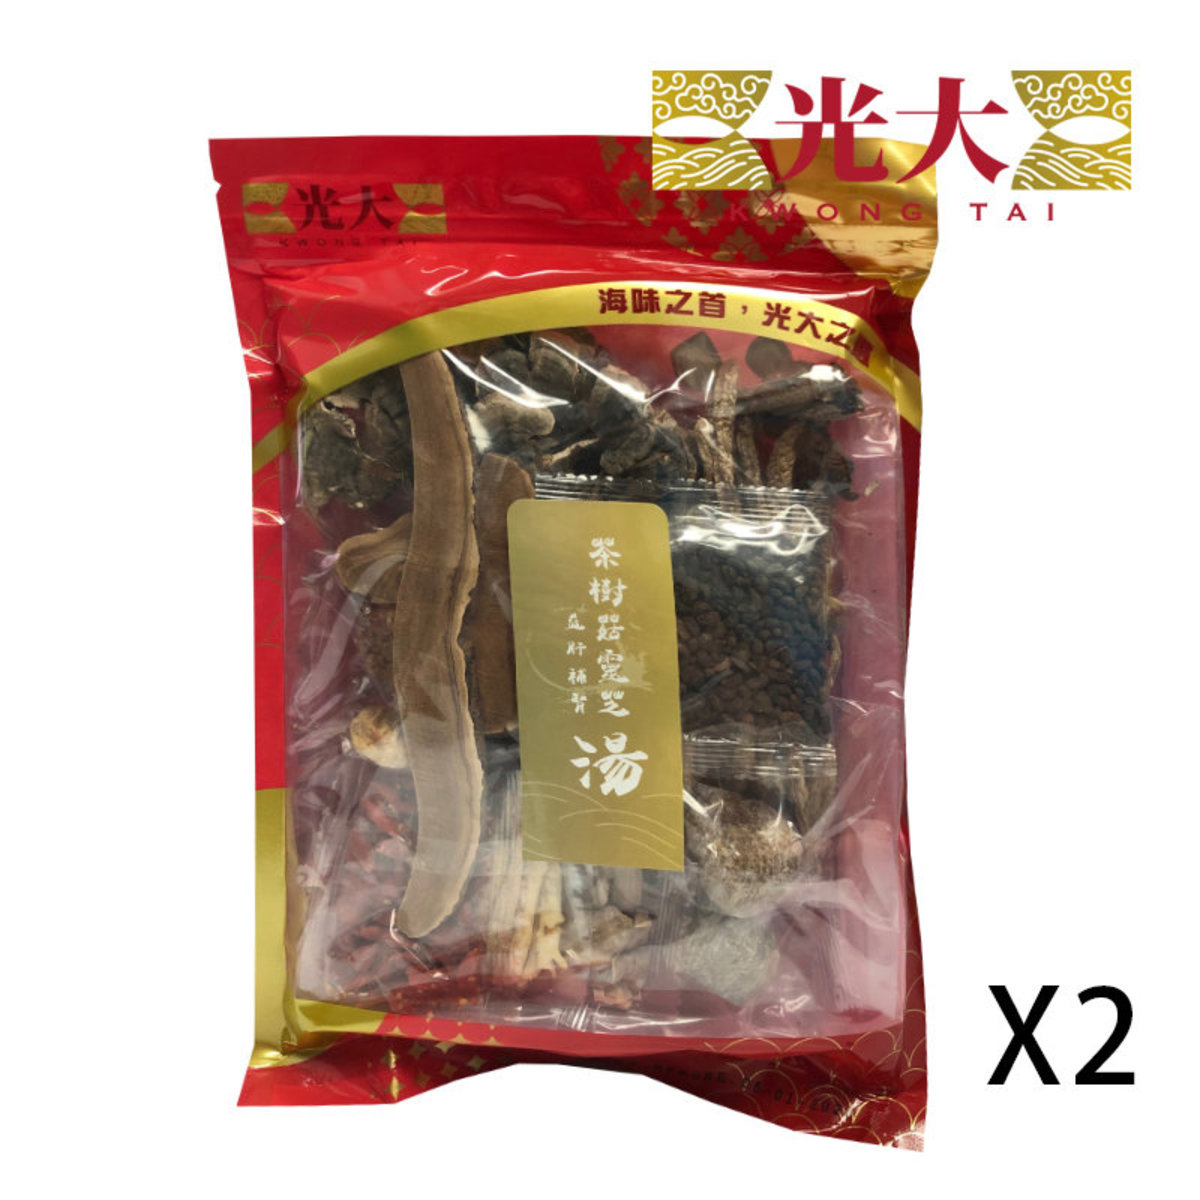 Tea Tree Mushroom with Ganoderma Soup (120g) x 2 packs